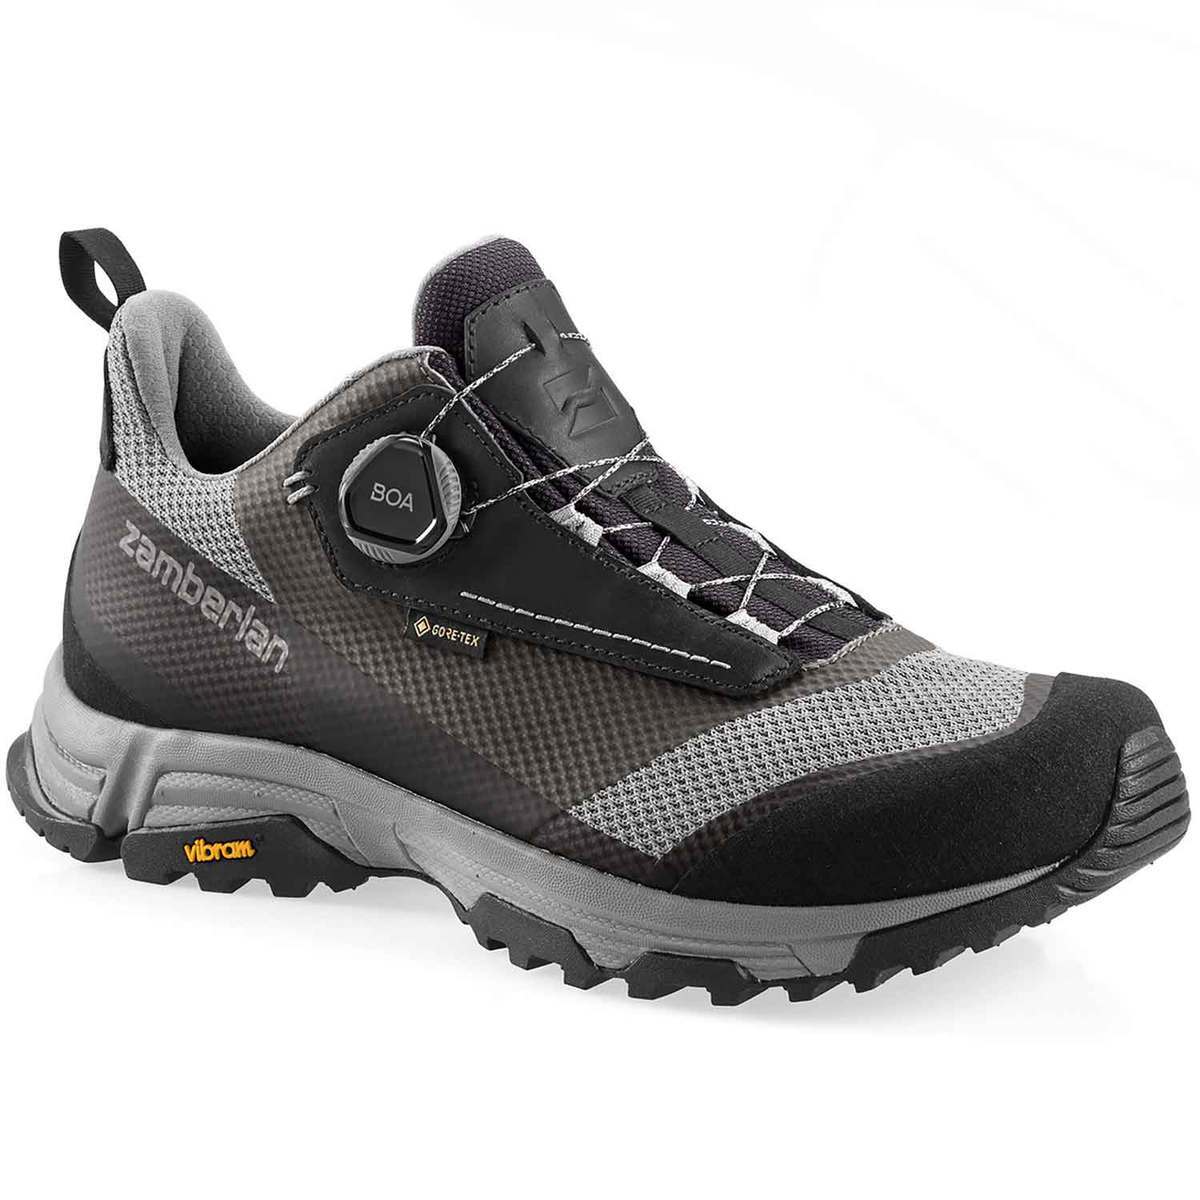 Zamberlan Men's Mamba BOA Waterproof Low Hiking Shoes - Black - Size 10 ...